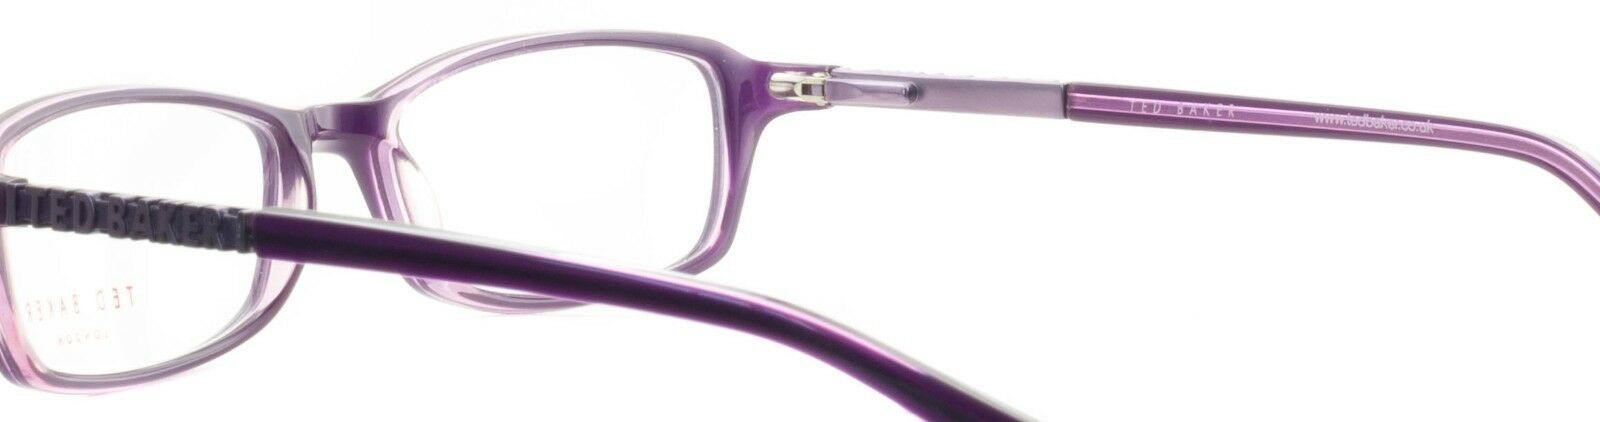 TED BAKER Catch Me 9029 794 Eyewear FRAMES Glasses Eyeglasses RX Optical New